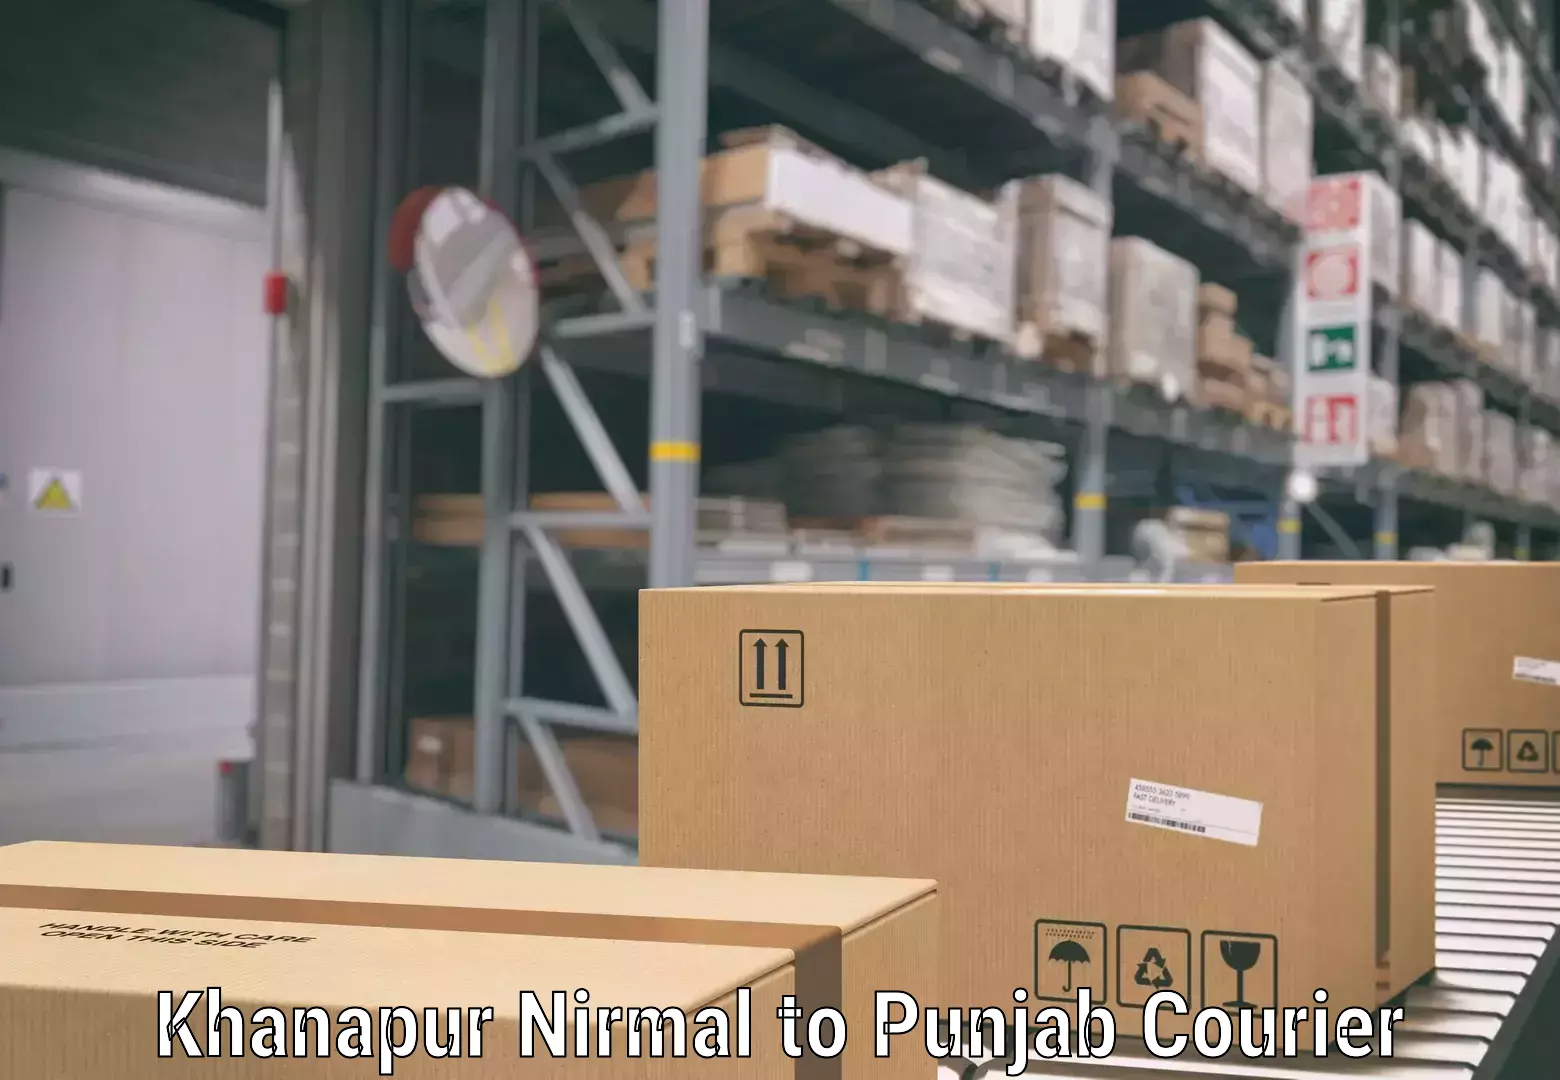 Luggage delivery system Khanapur Nirmal to Punjab